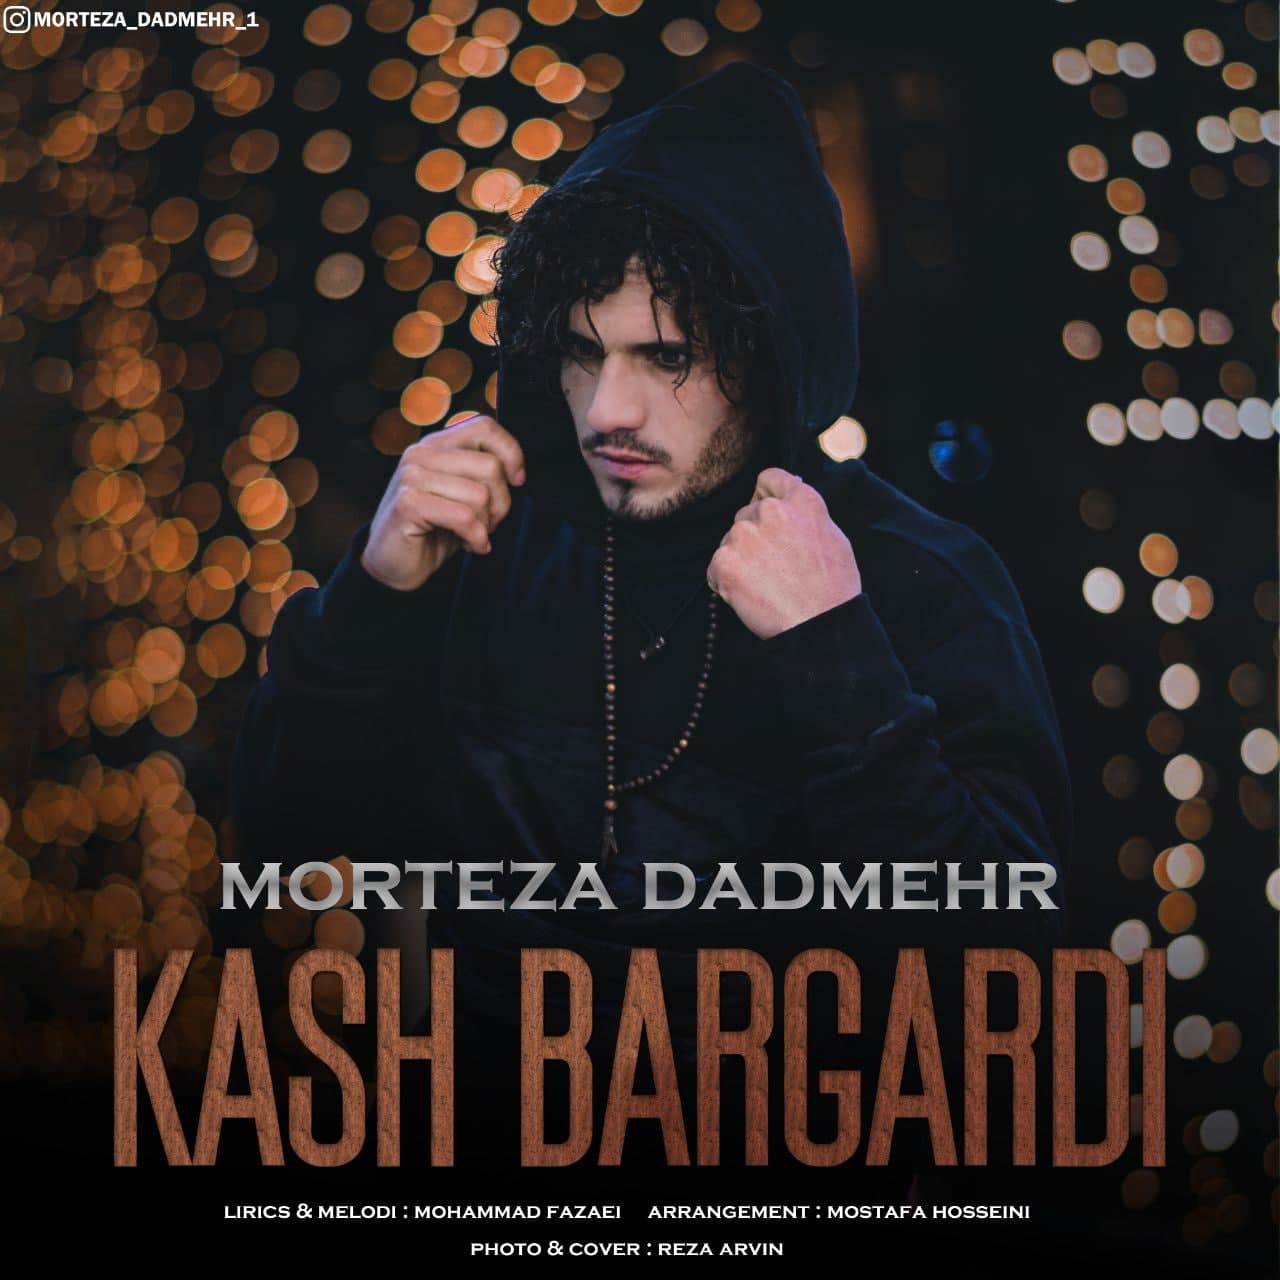 Morteza Dadmehr – Kash Bargardi